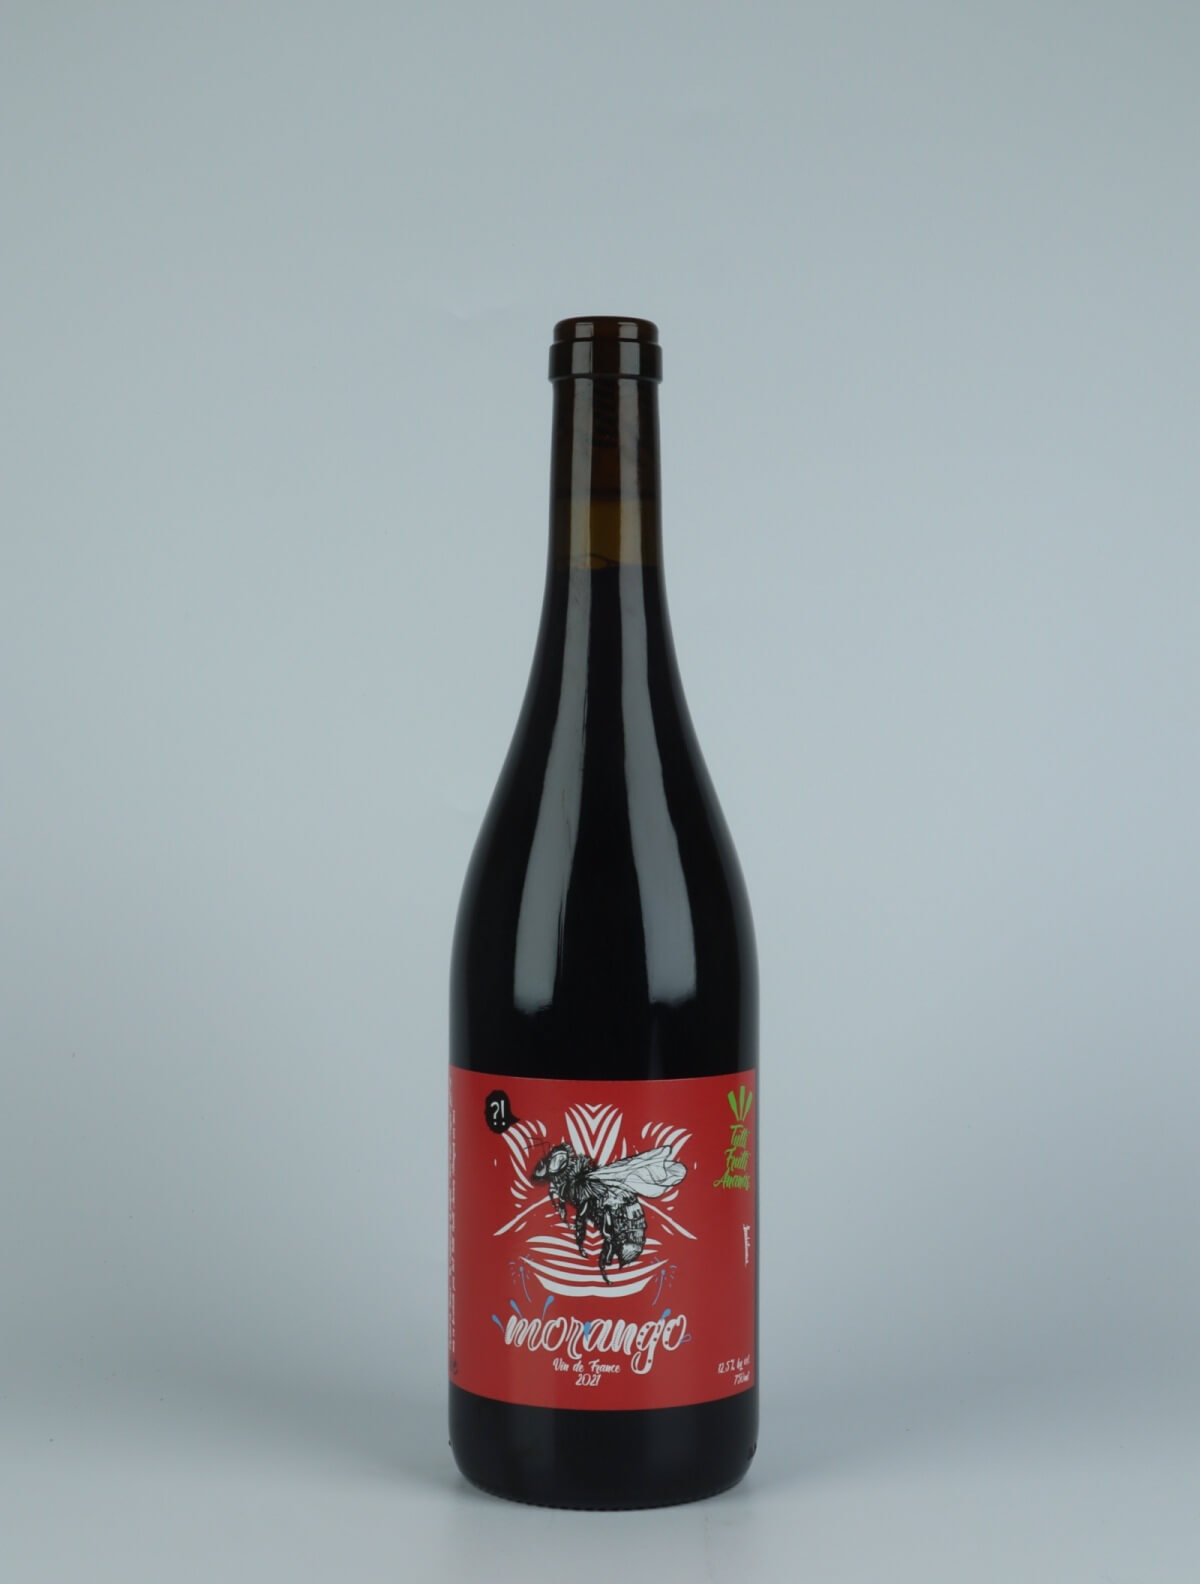 A bottle 2021 Morango Red wine from Tutti Frutti Ananas, Rousillon in France